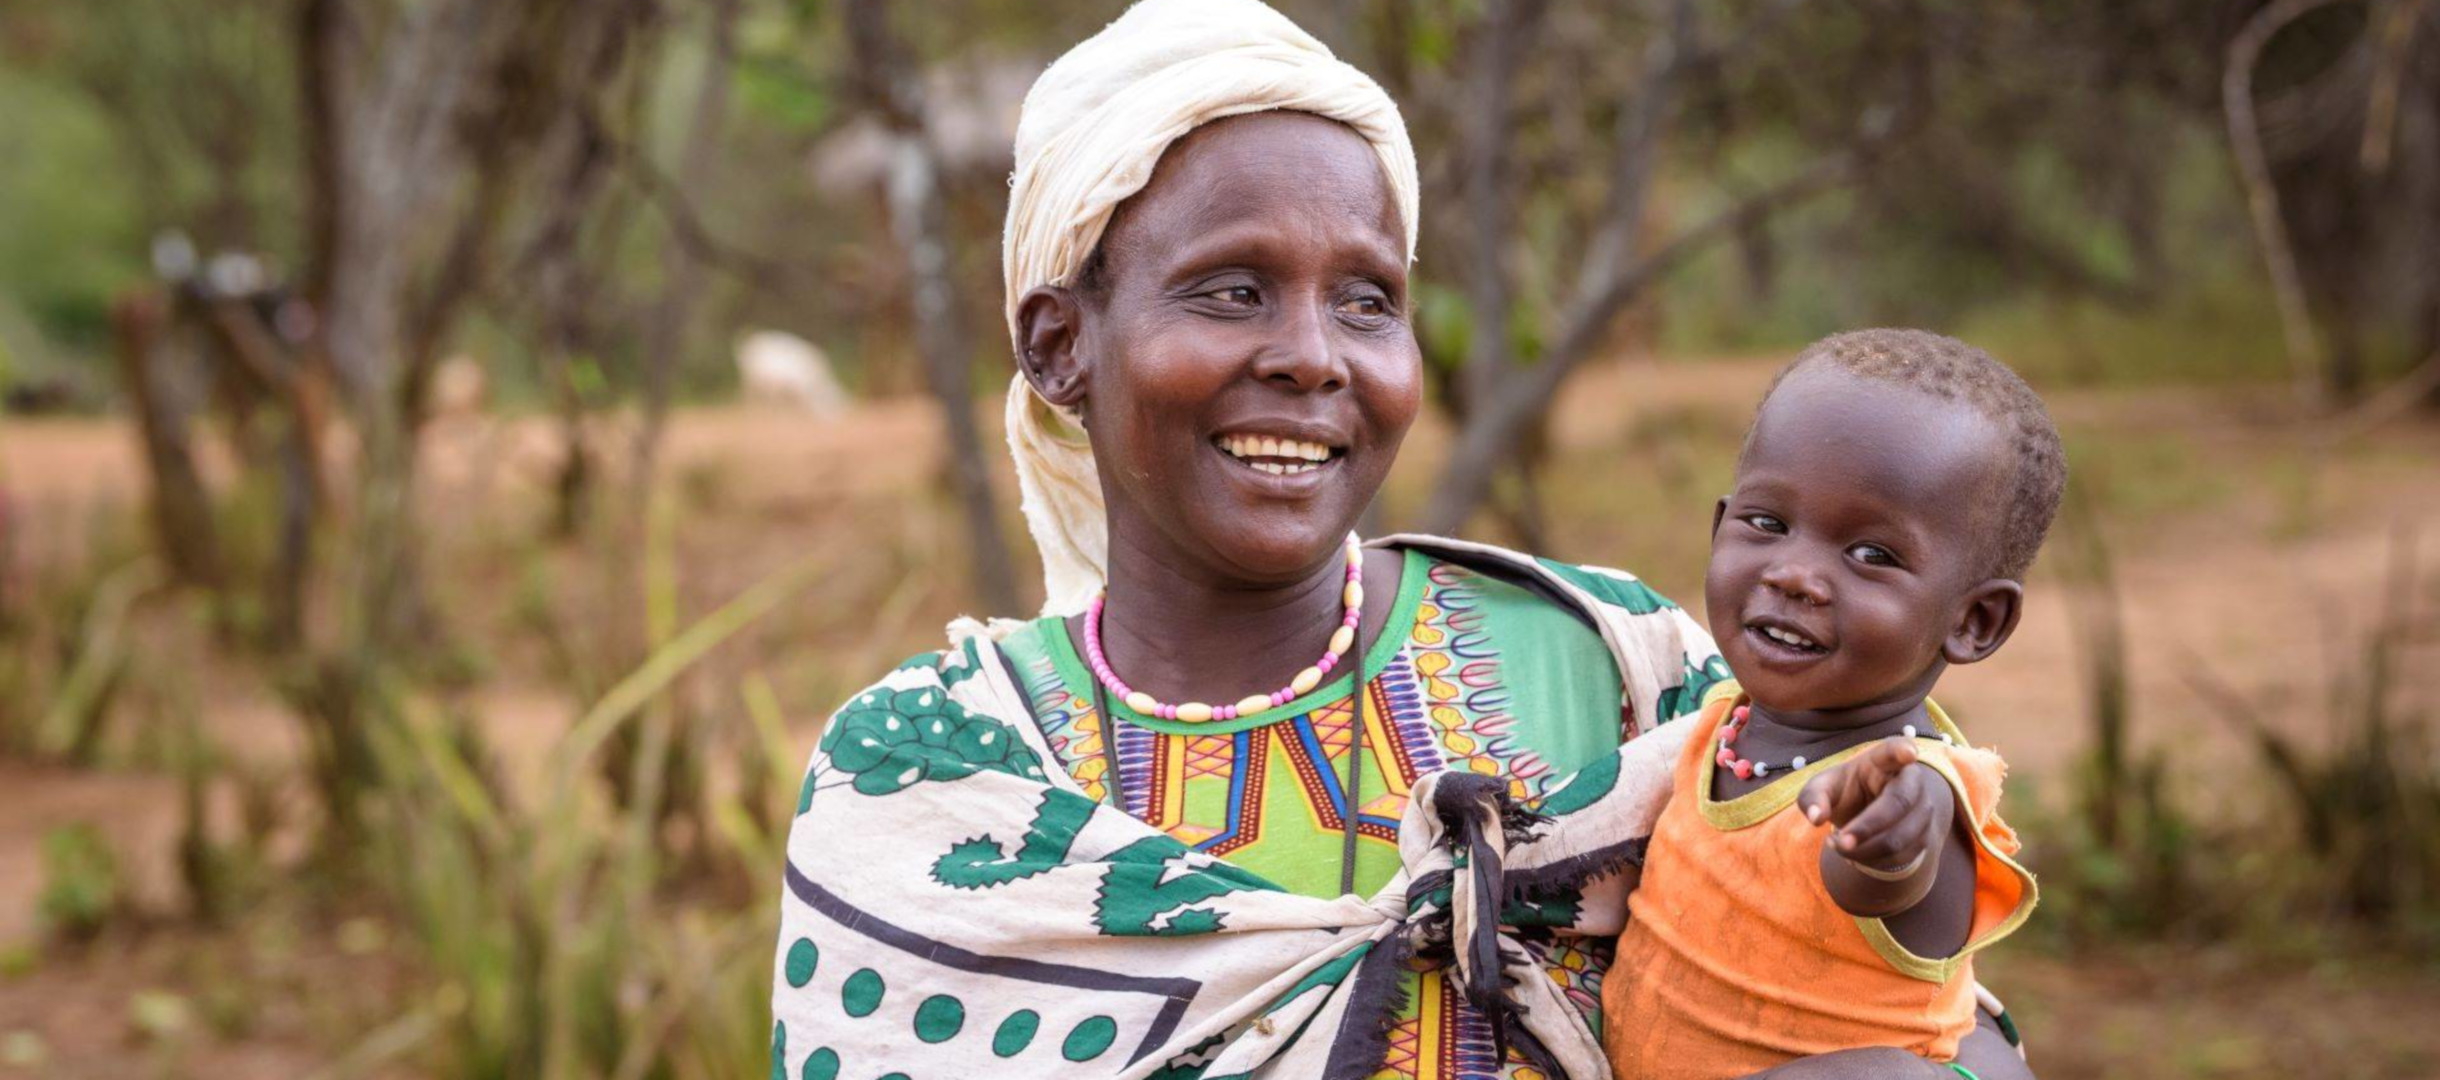 Frau mit Kind in Kenia